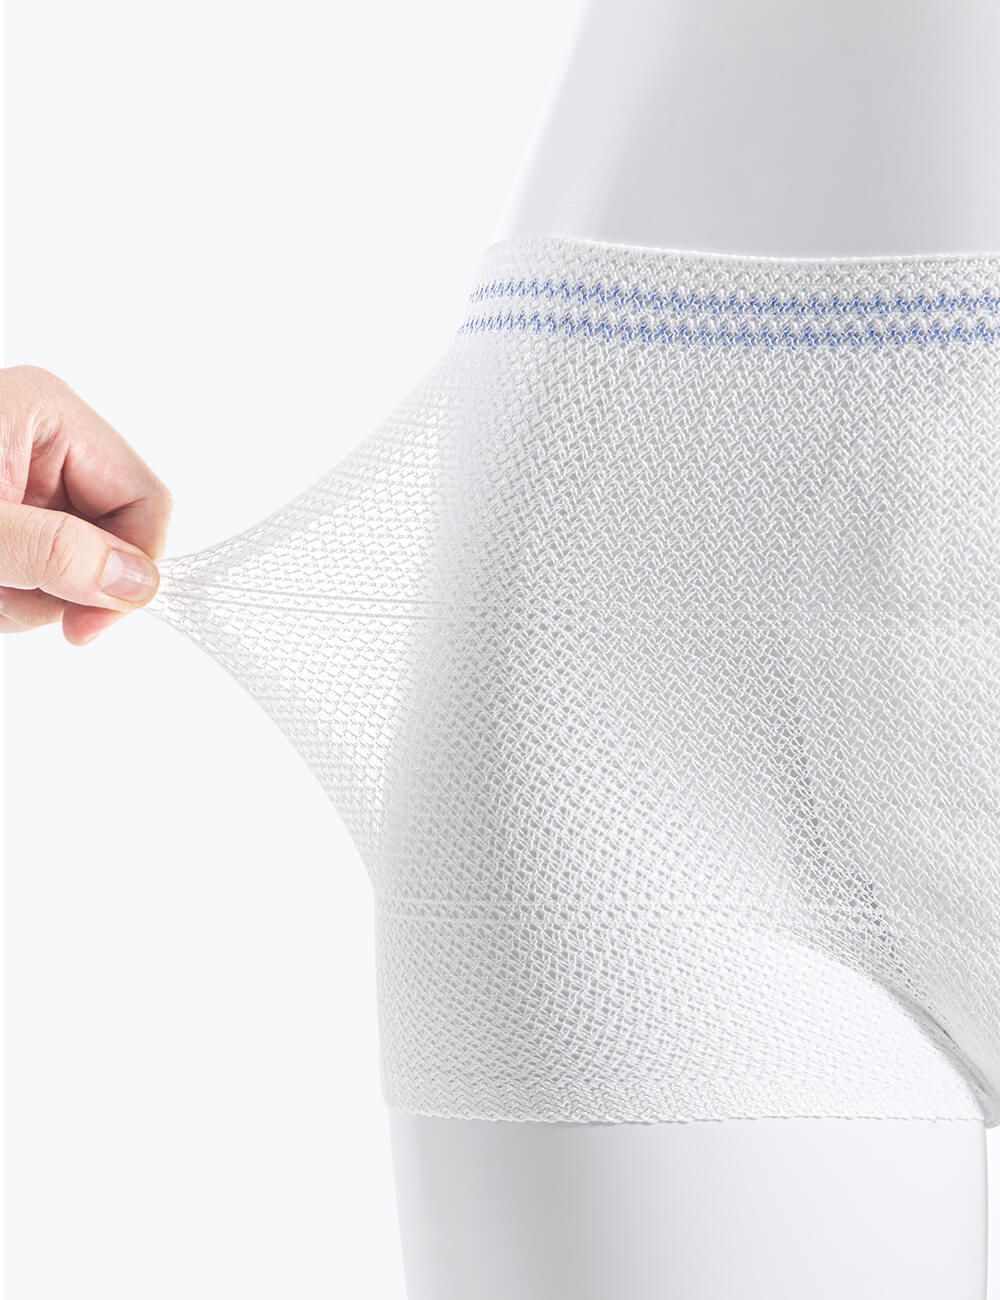 Hospital Mesh Underwear Disposable Panties for Postpartum